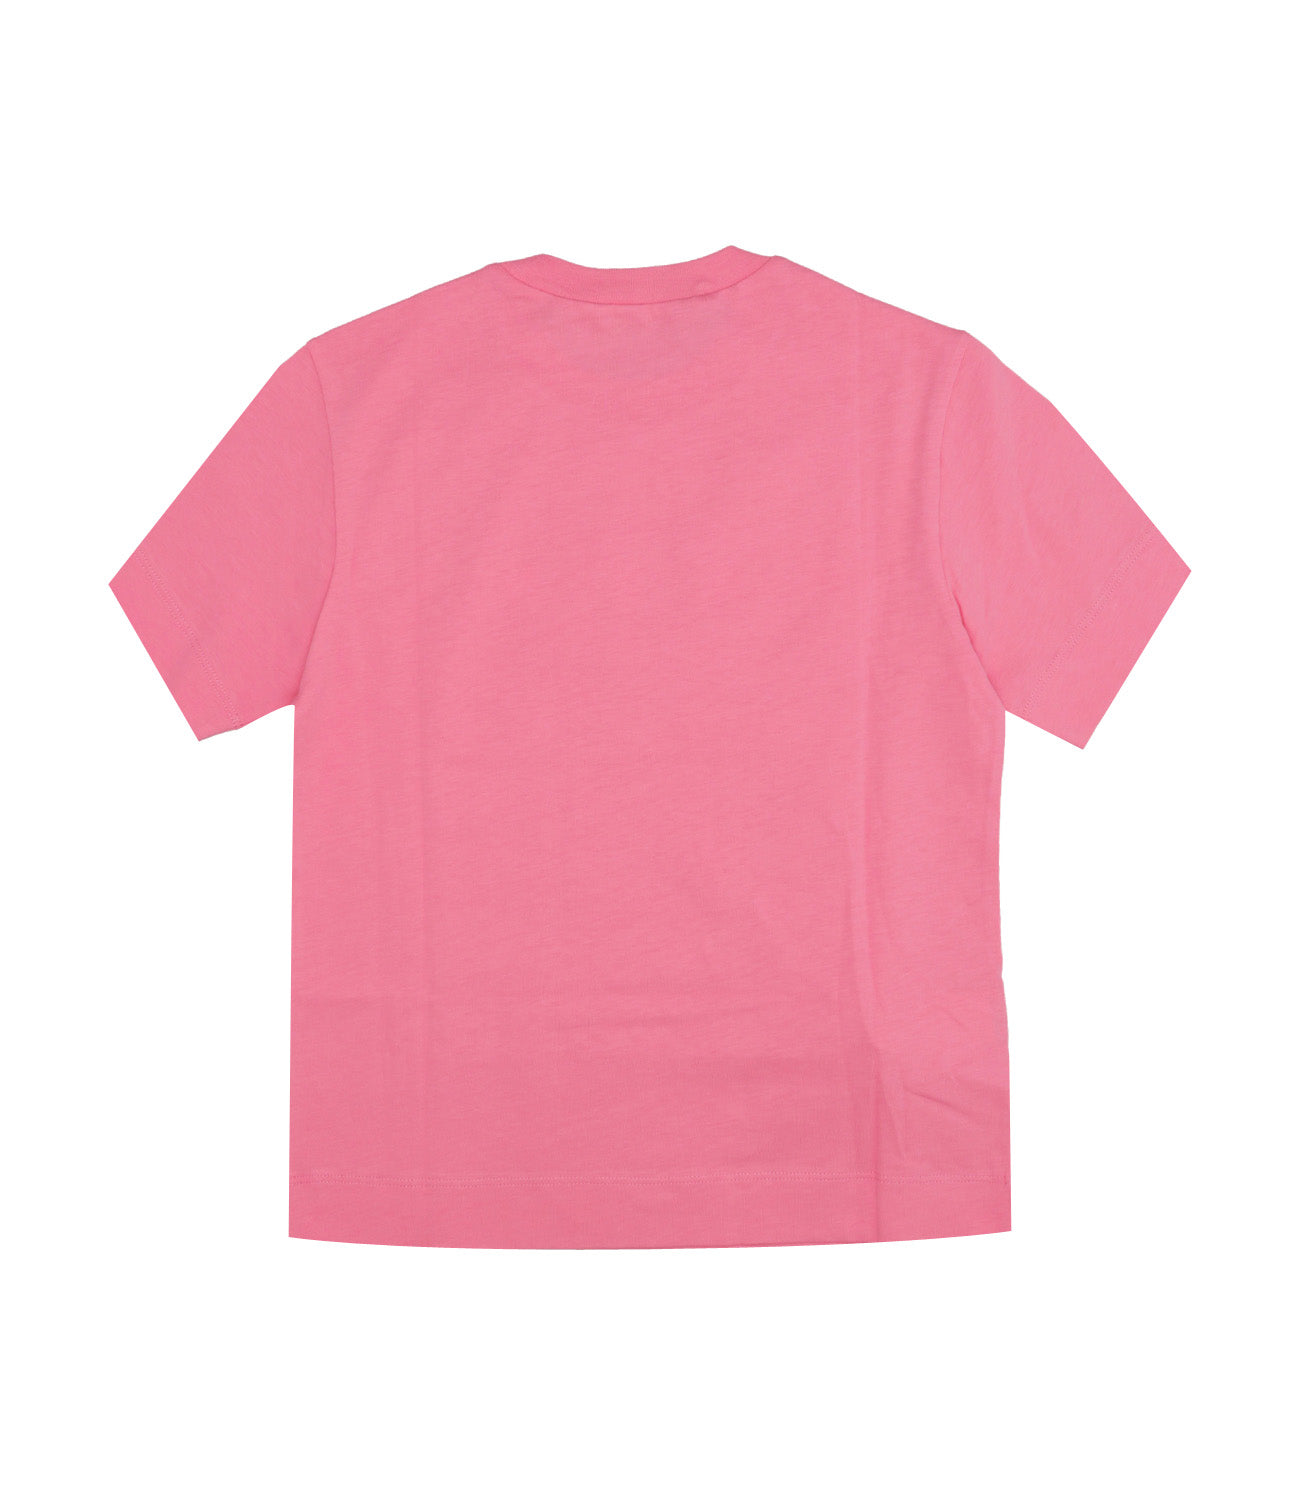 Marni Kids | Peach Pink T-Shirt